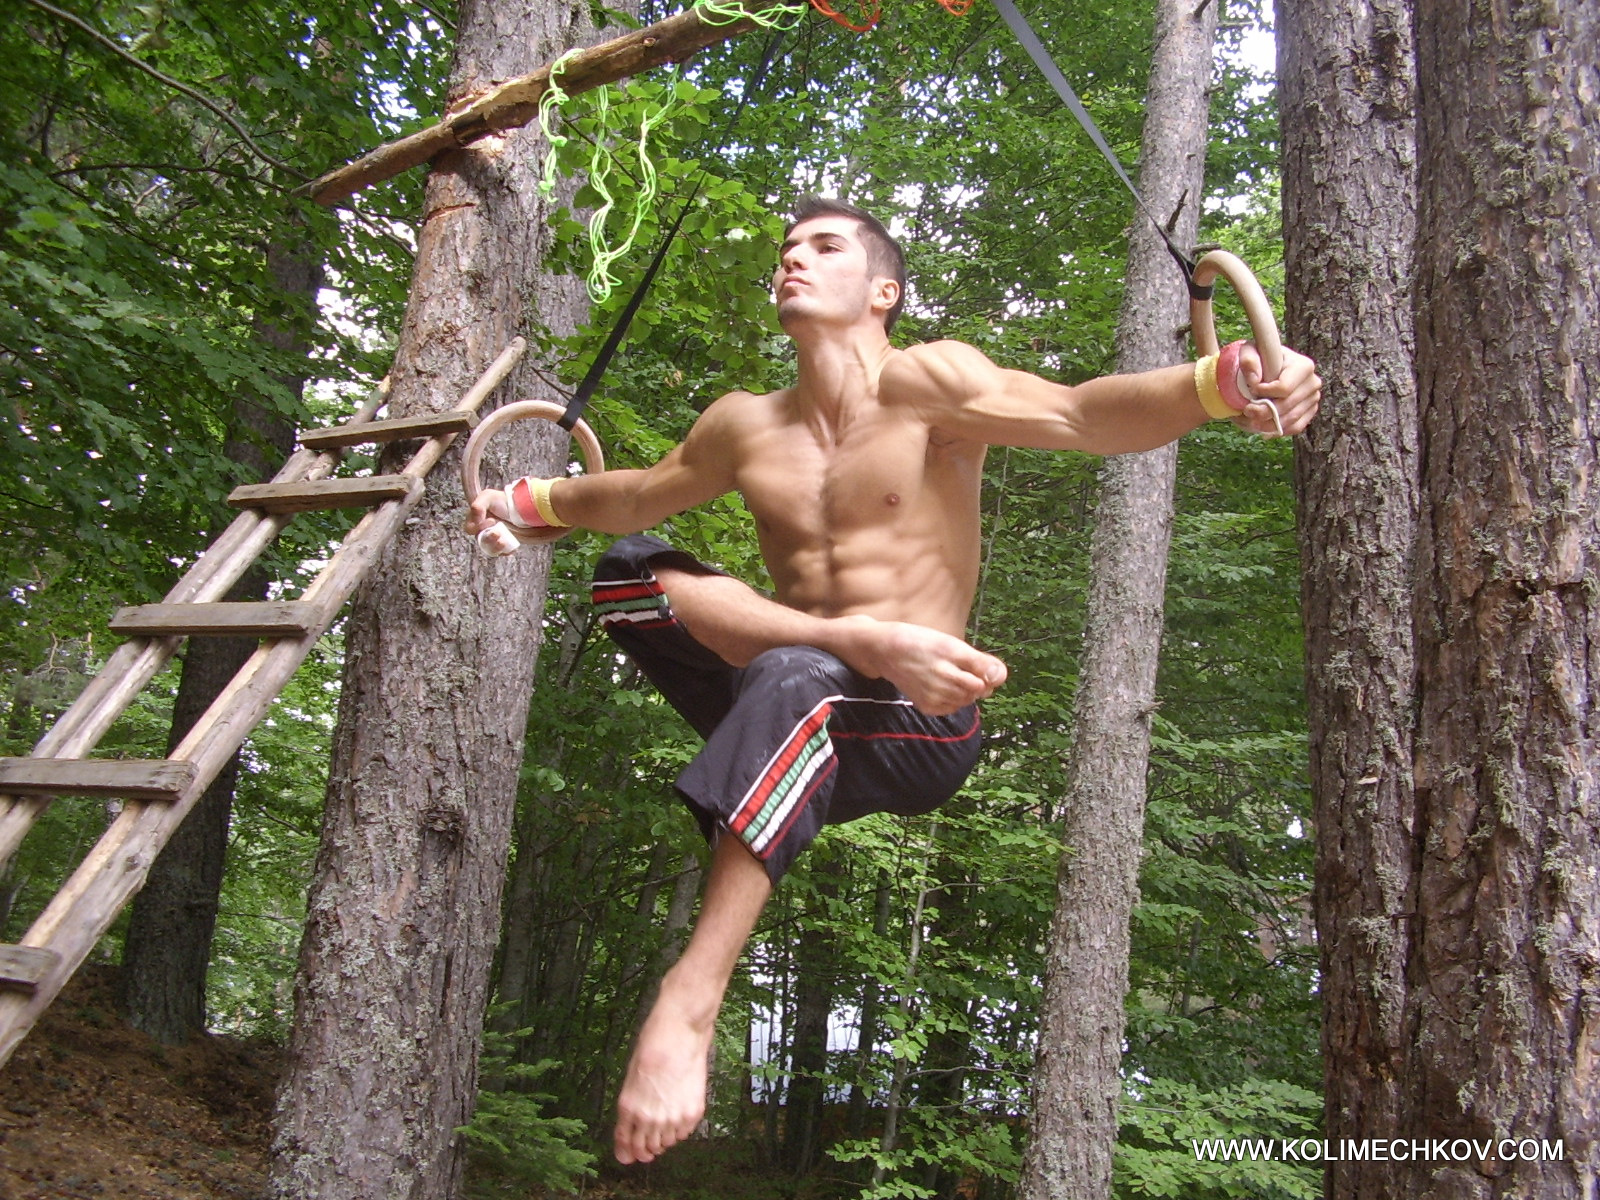 Stefan Kolimechkov doing gymnastics in the Pirin Mountains in 2007